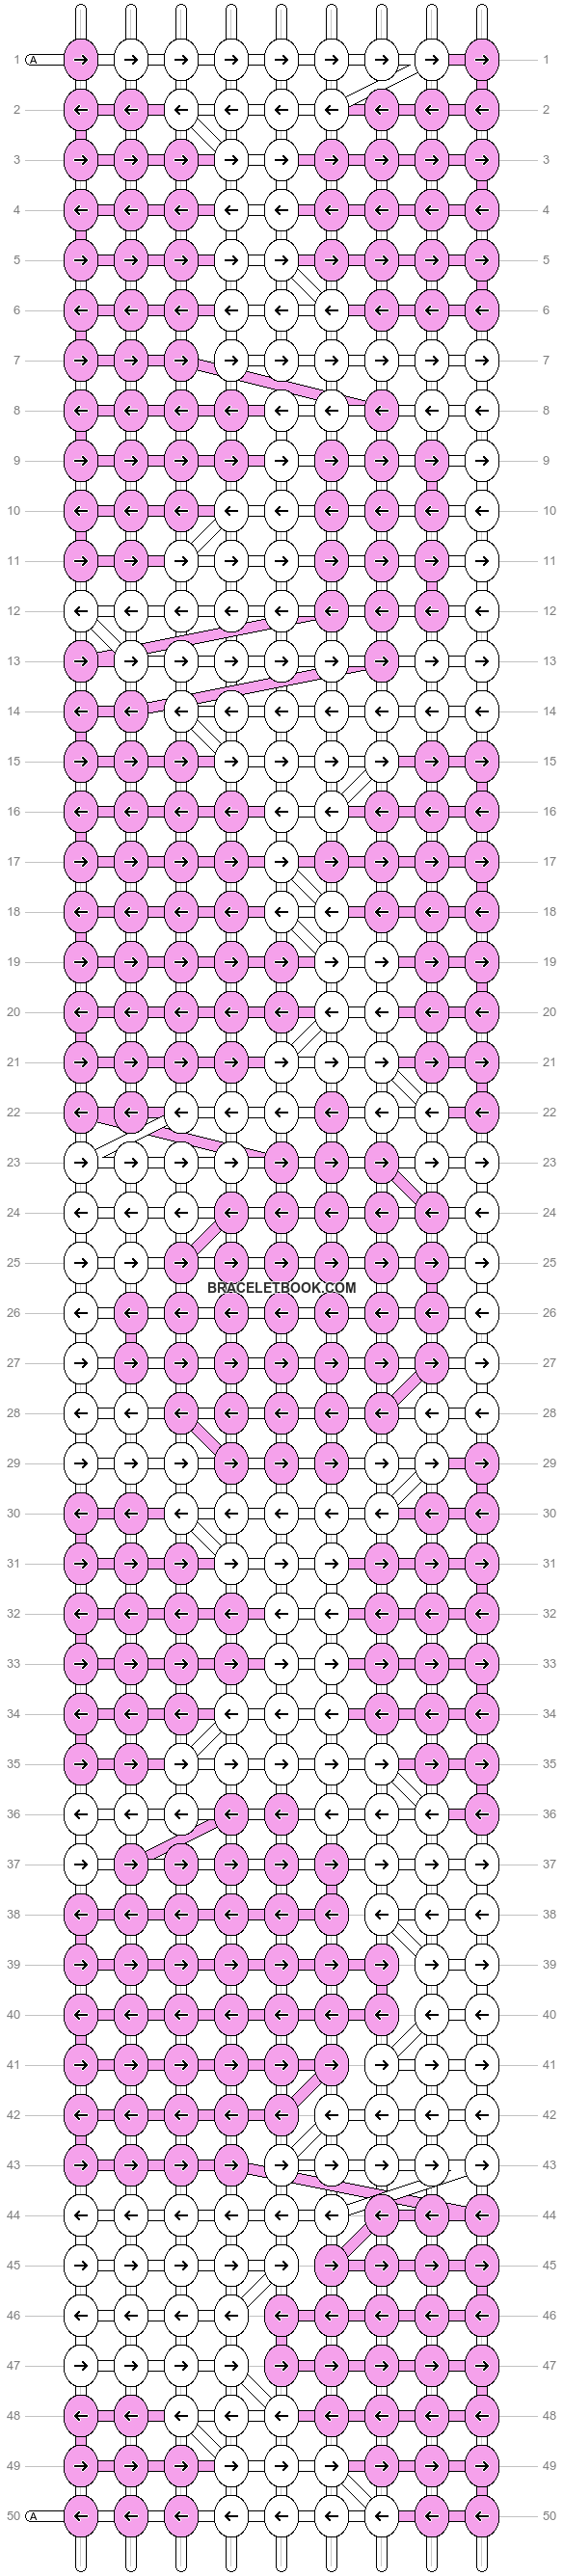 Alpha pattern #51266 variation #89625 pattern